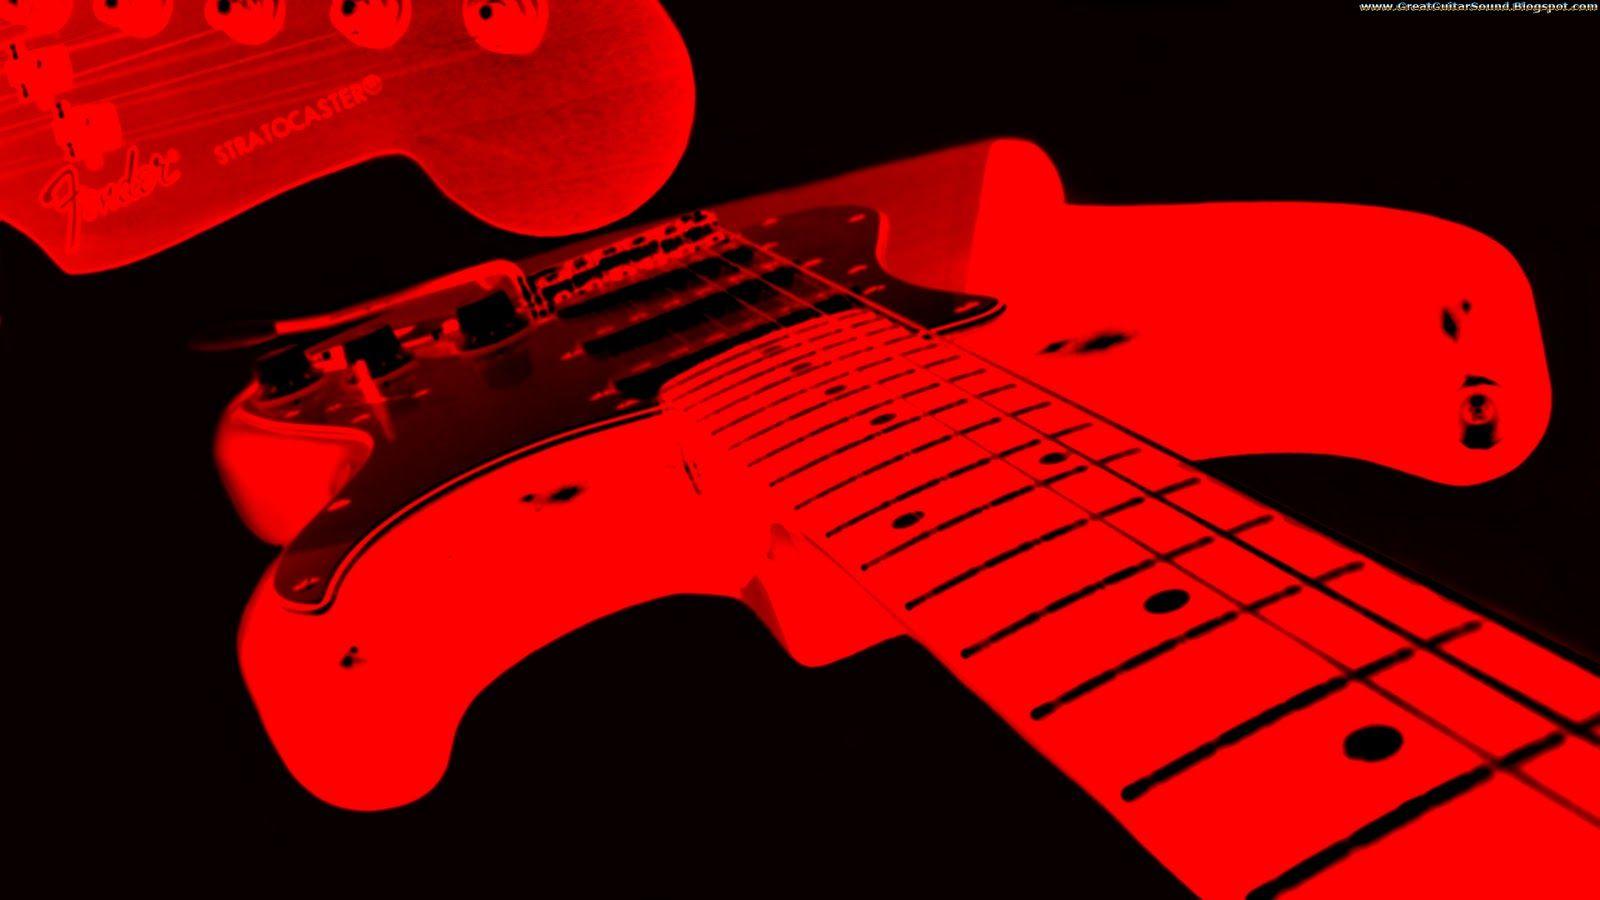 Great Guitar Sound: Guitar Wallpaper And Black Fender